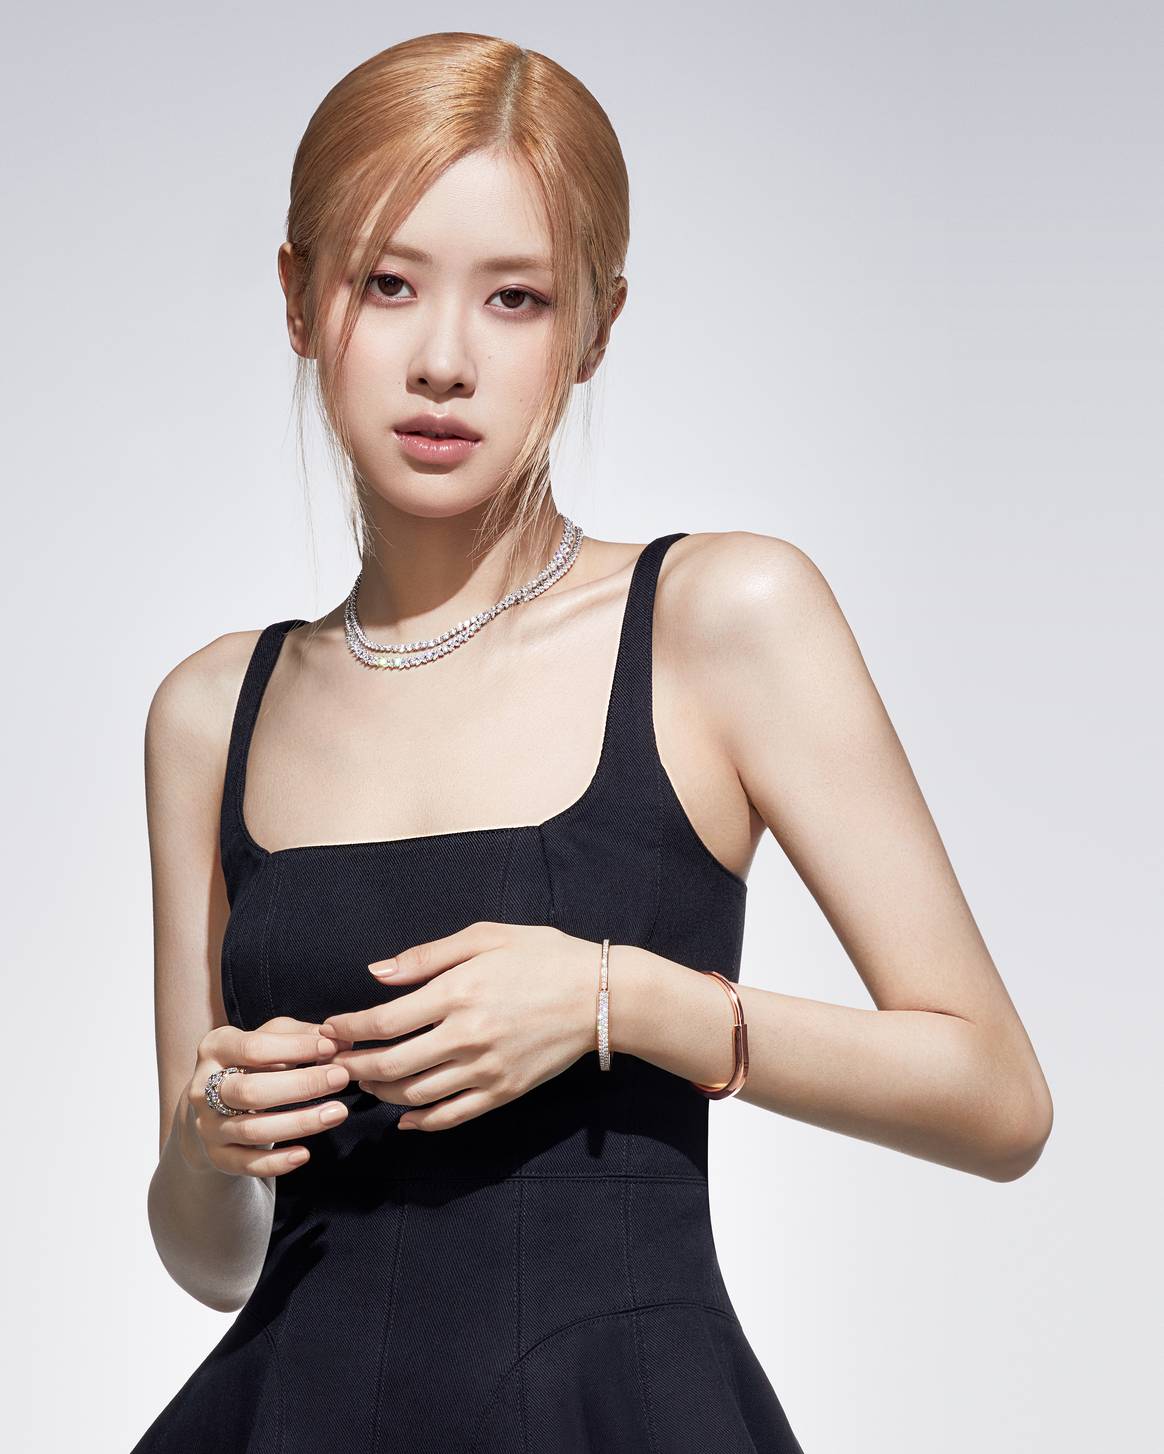 Image: Tiffany & Co.; Tiffany Lock campaign featuring Blackpink’s Rosé